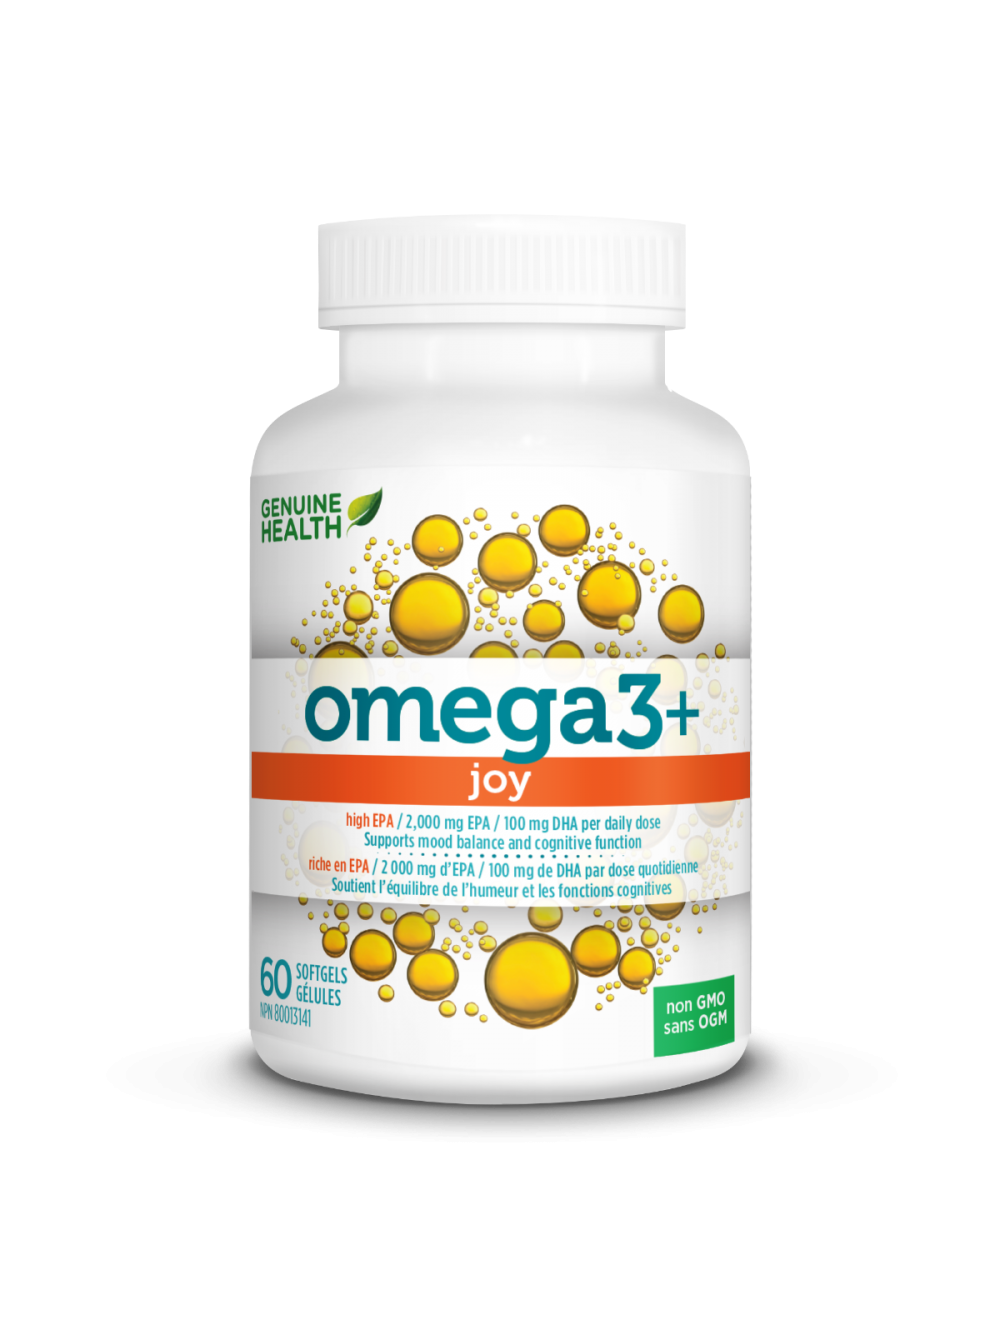 Genuine Health omega3+ JOY - capsules - 0